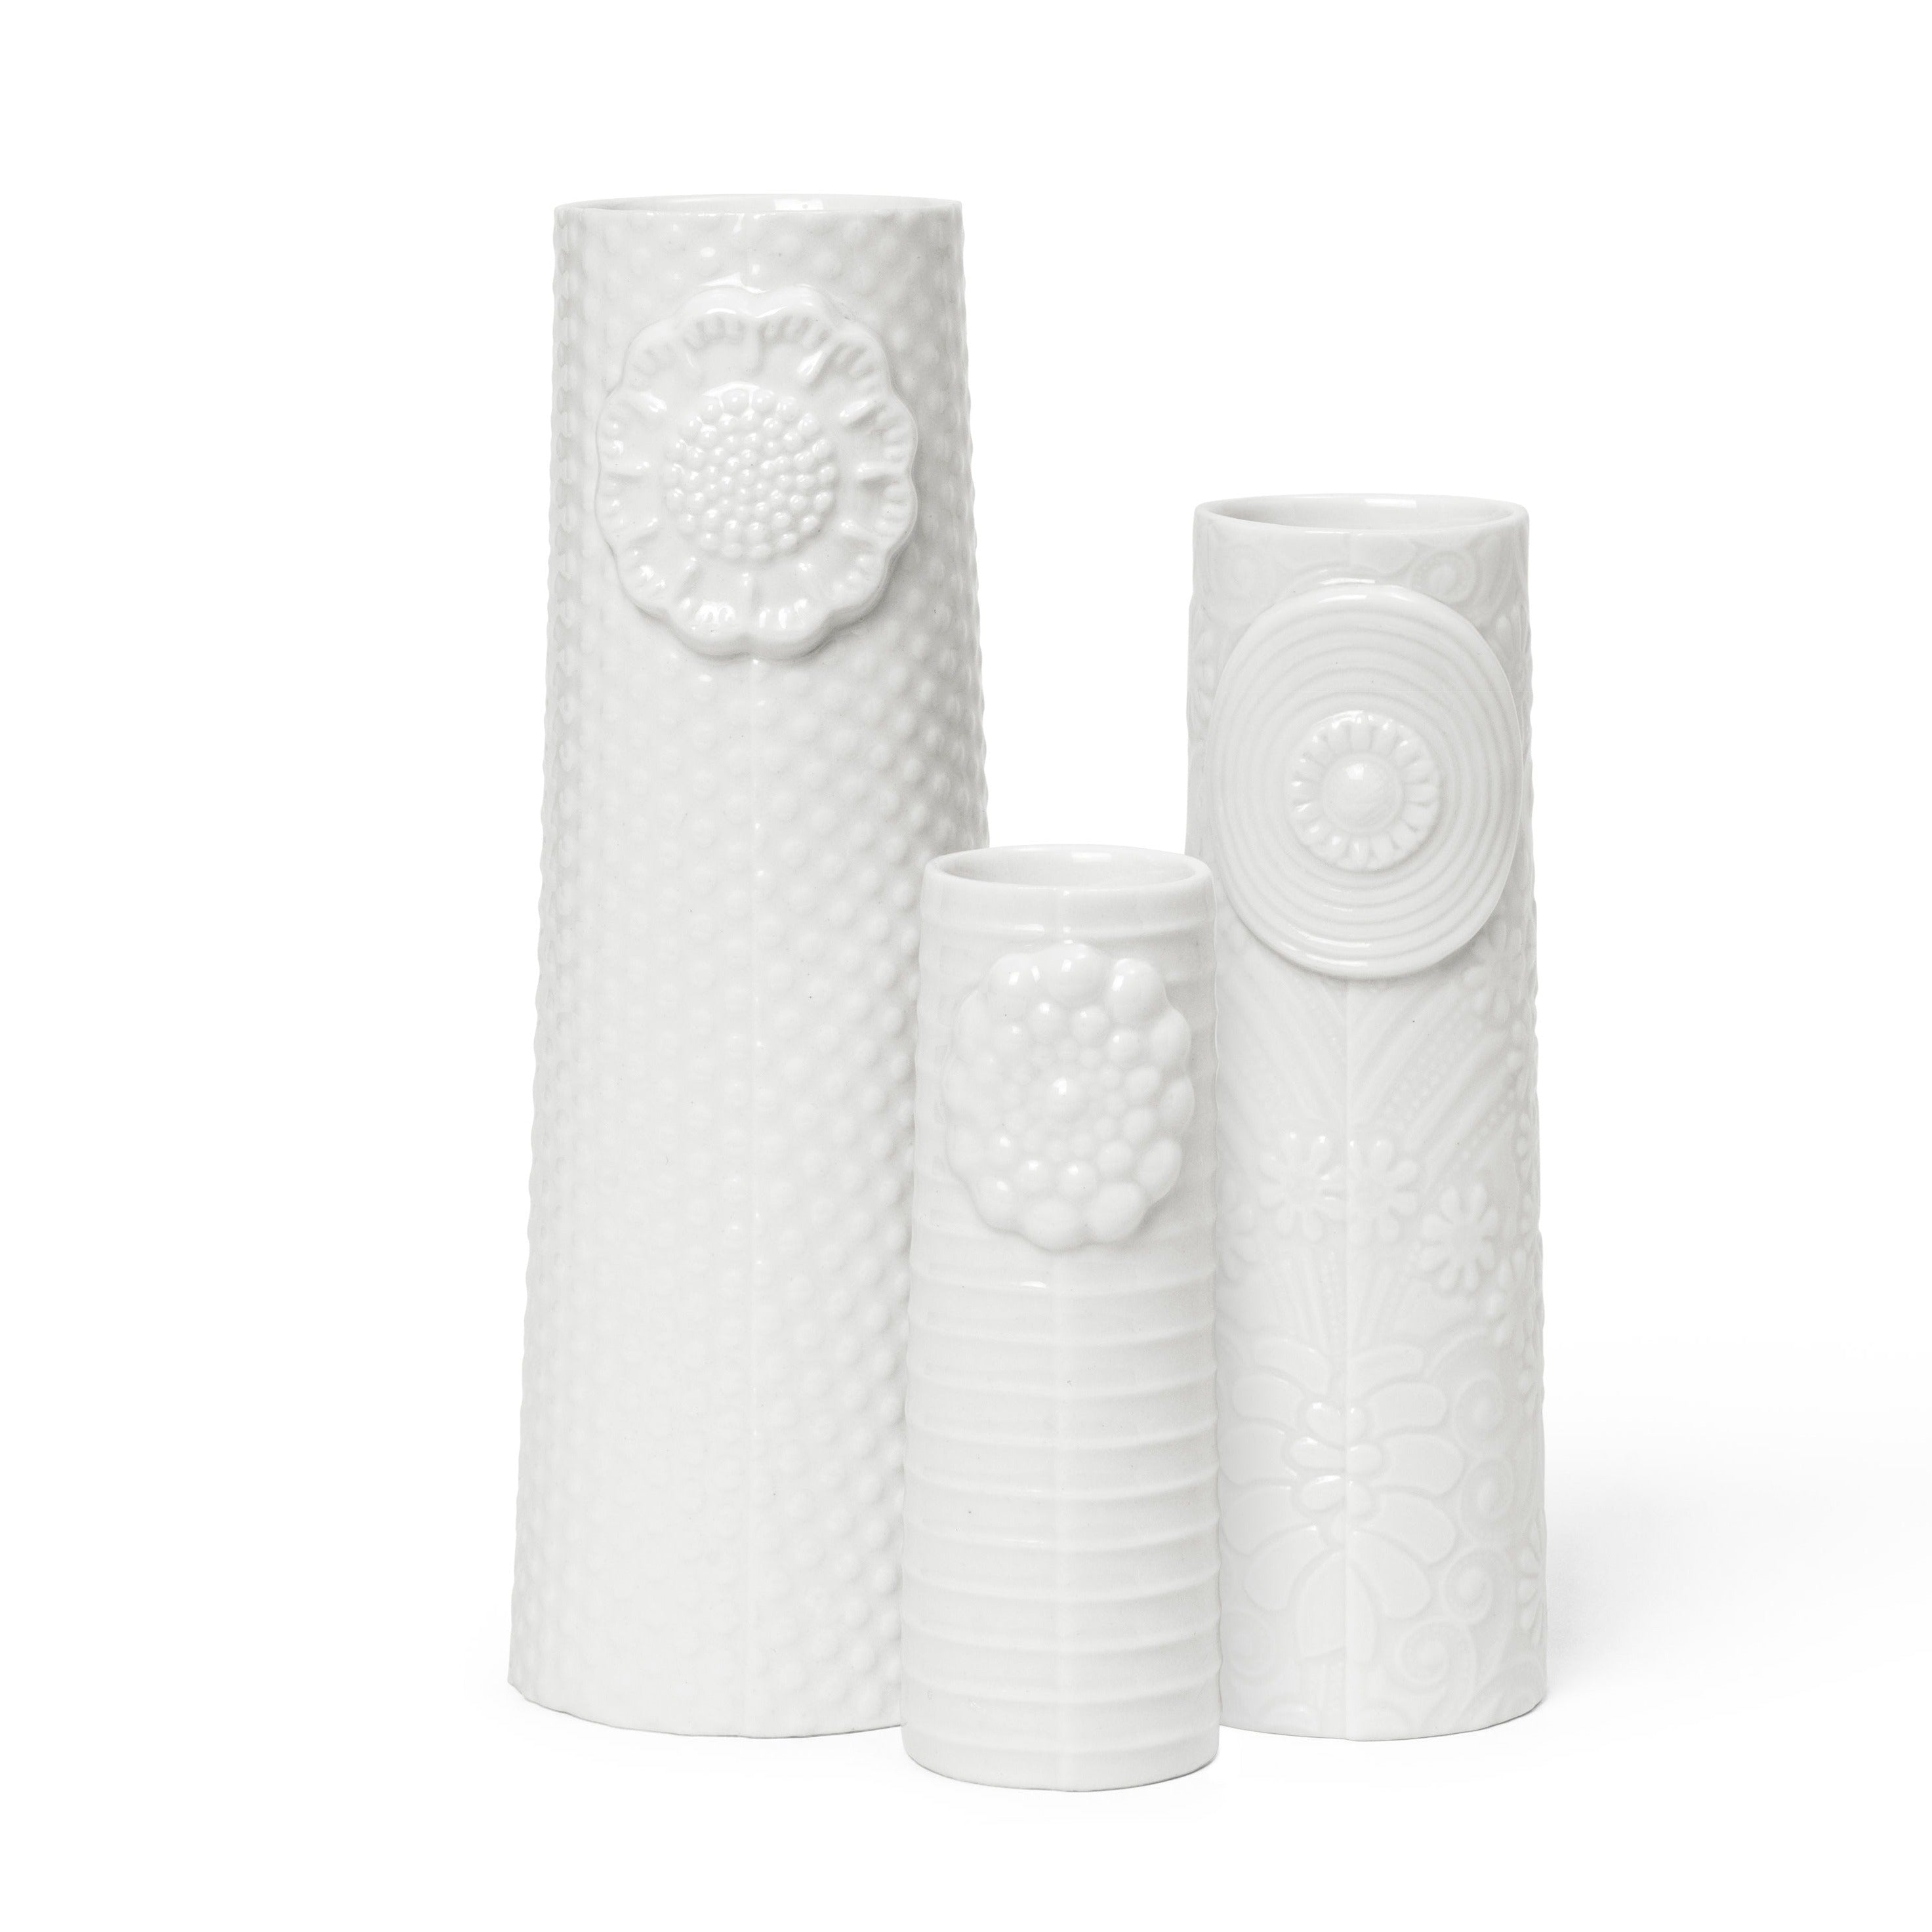 Pipanella Flock - Clean Linen - Set of Three Vases